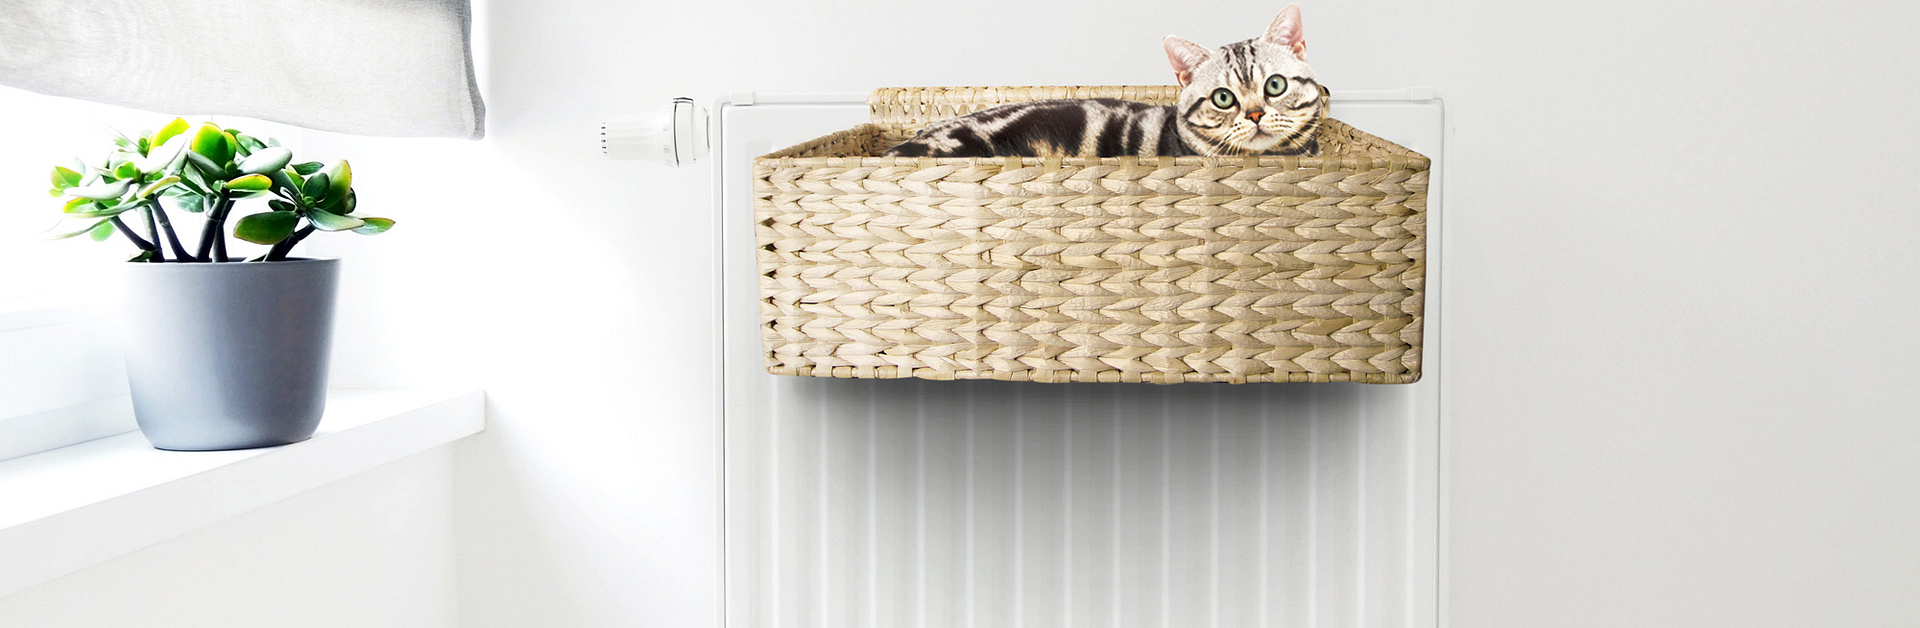 Kattenhangmat radiatorhangmat kopen? | Krabpaal.nl